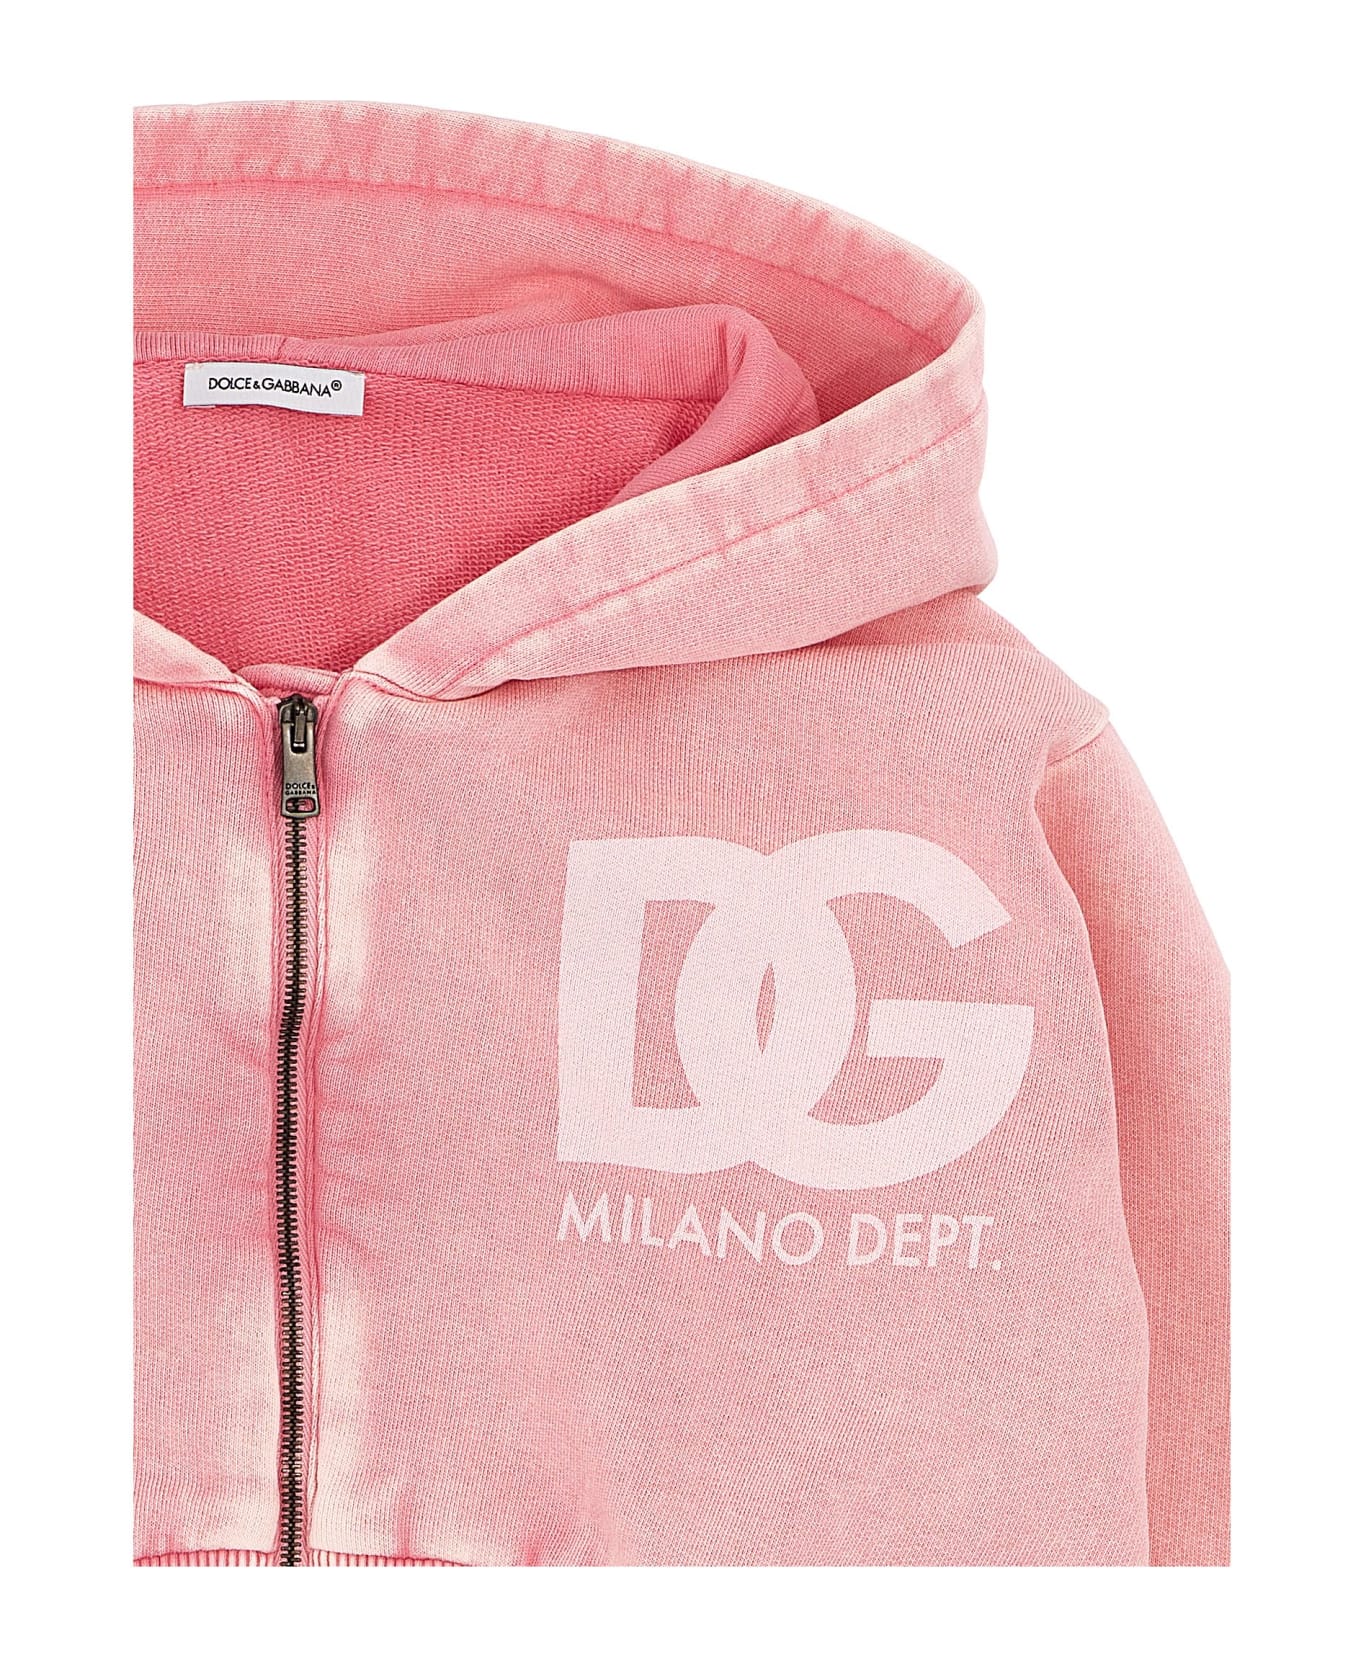 Dolce & Gabbana Logo Print Hoodie - Pink